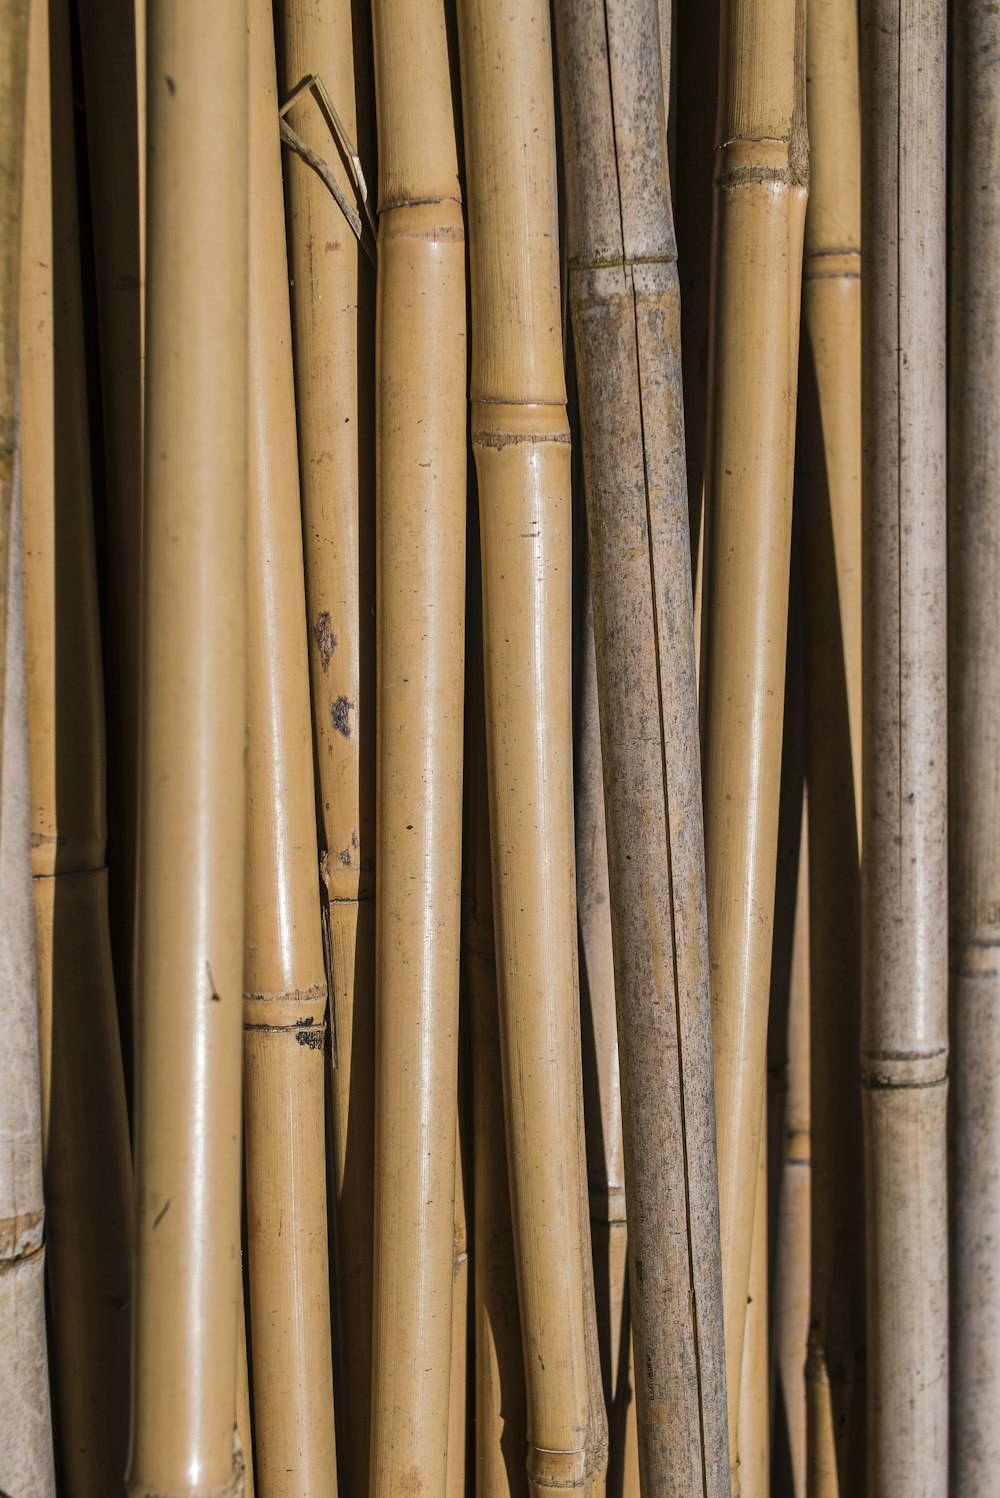 brown wooden sticks on brown wooden surface